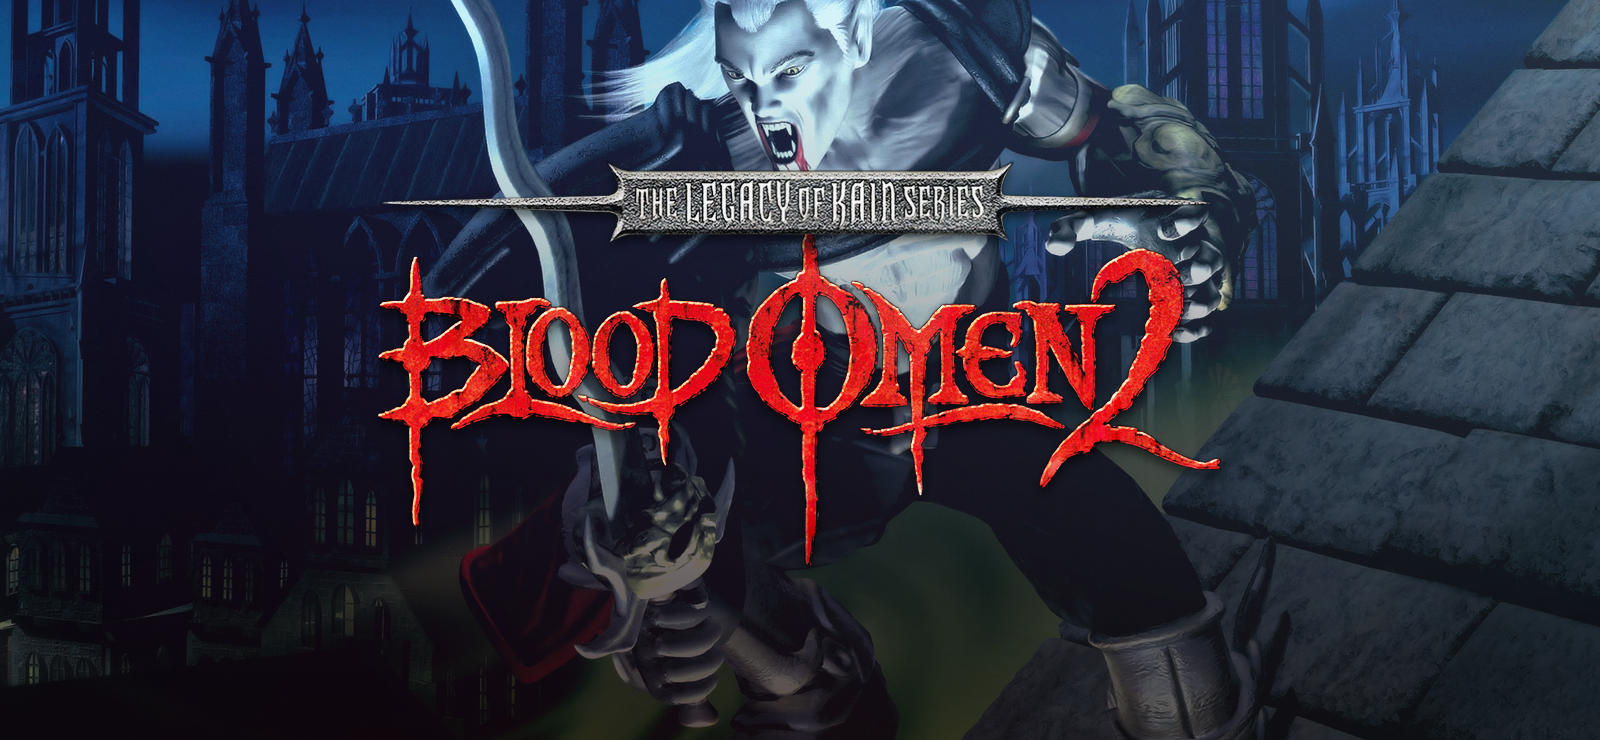 Legacy Of Kain: Blood Omen 2